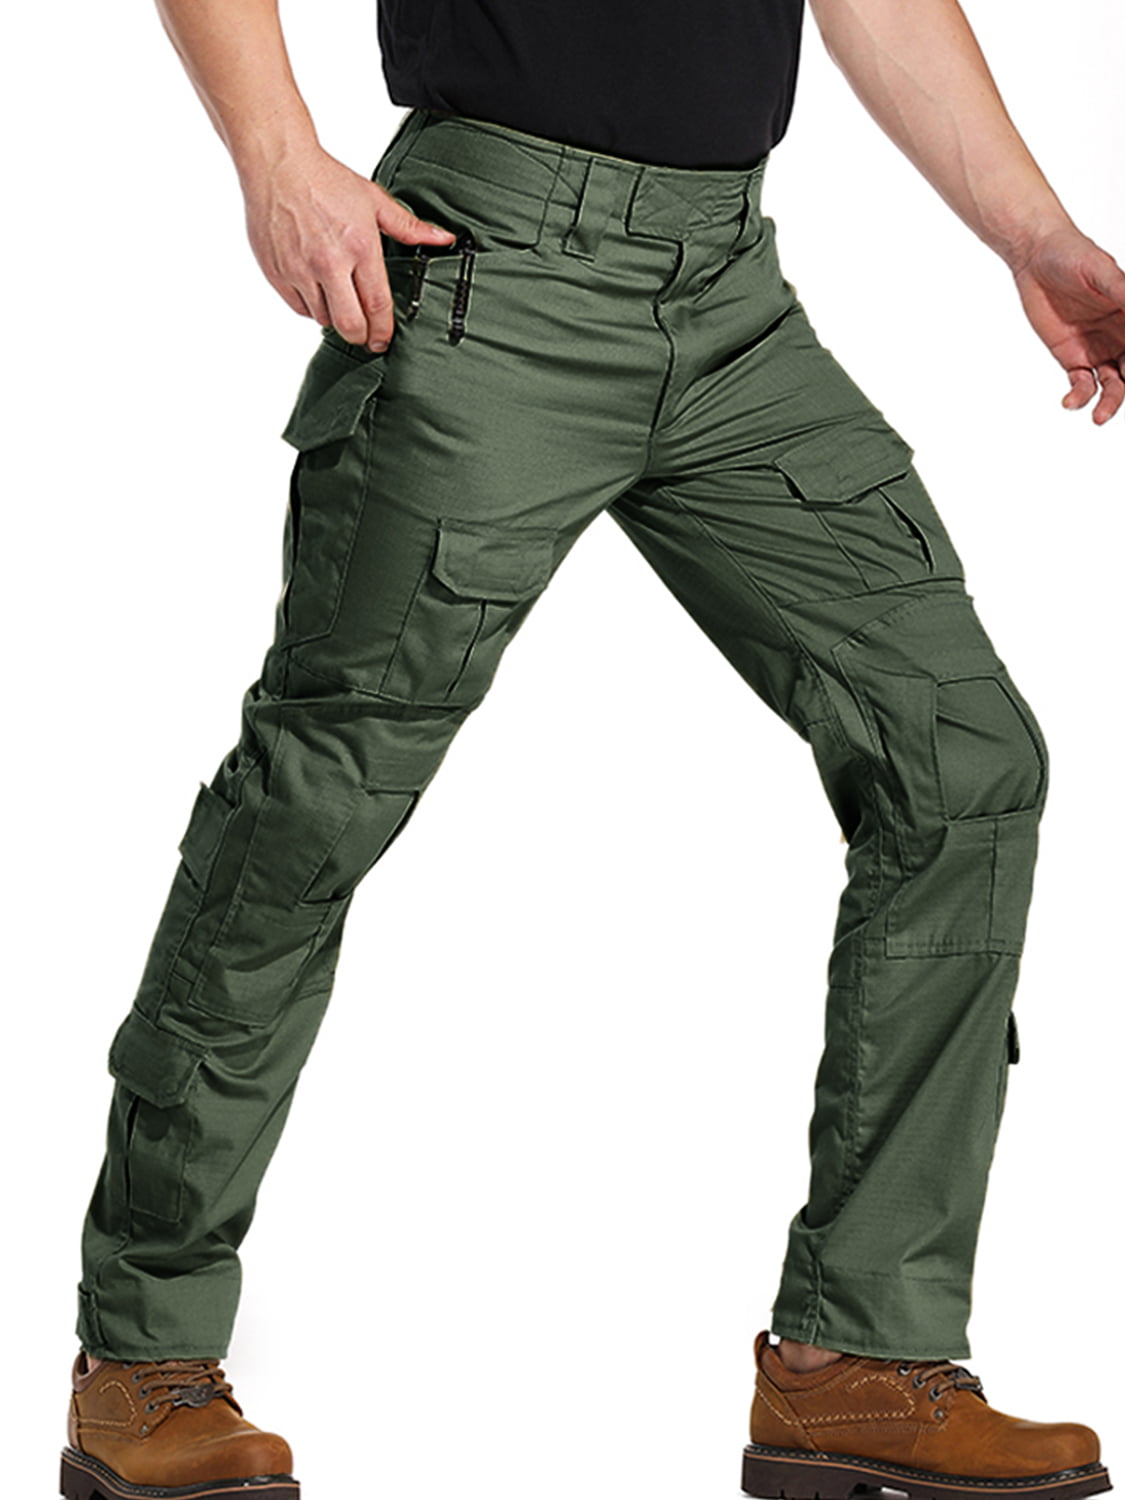 Mens Cargo Combat Work Trousers   HEAVY DUTY Work Pants multi pockets Size 32-42 